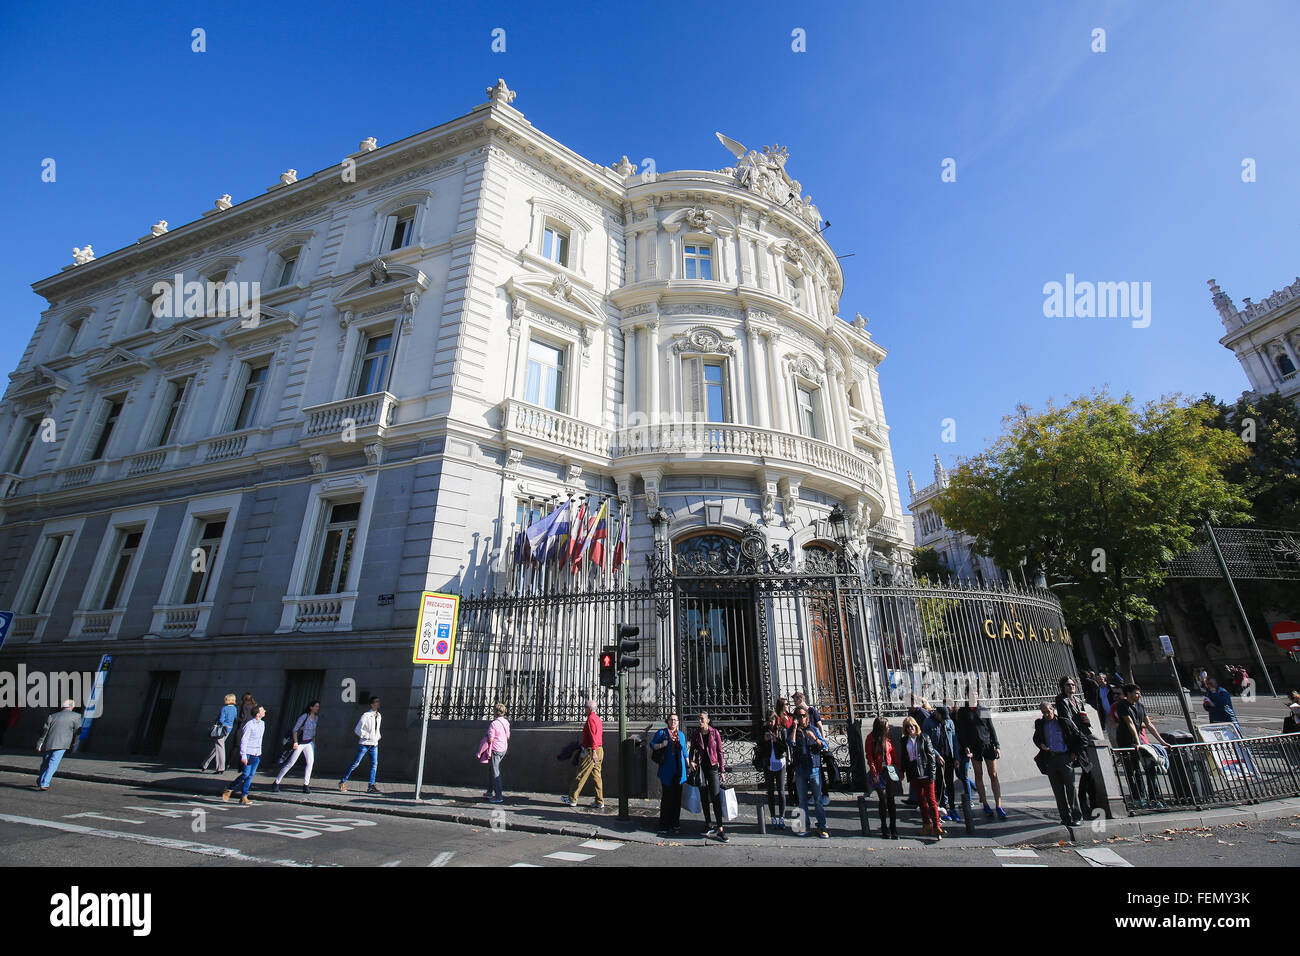 MADRID, SPAIN - NOVEMBER 14, 2015: The Palace of Linares (Spanish: Palacio de Linares) is a palace located at the Plaza de Cibel Stock Photo